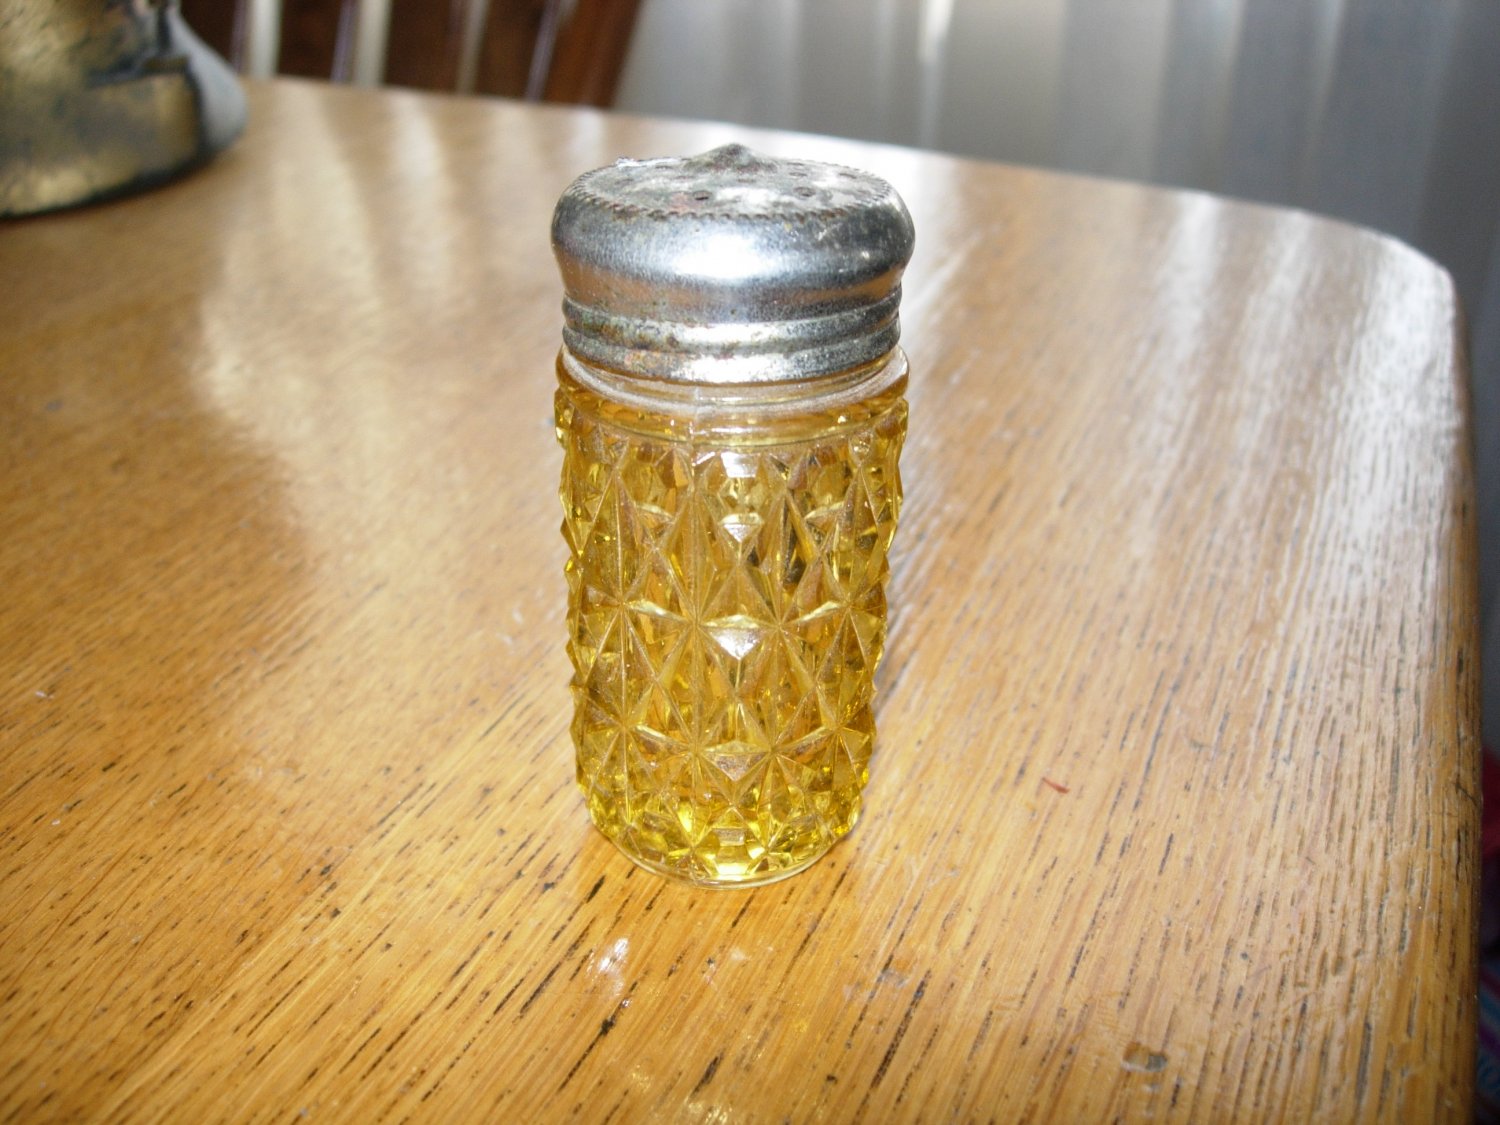 Antique Diamond Block Variant Amber Pressed Glass Salt Shaker